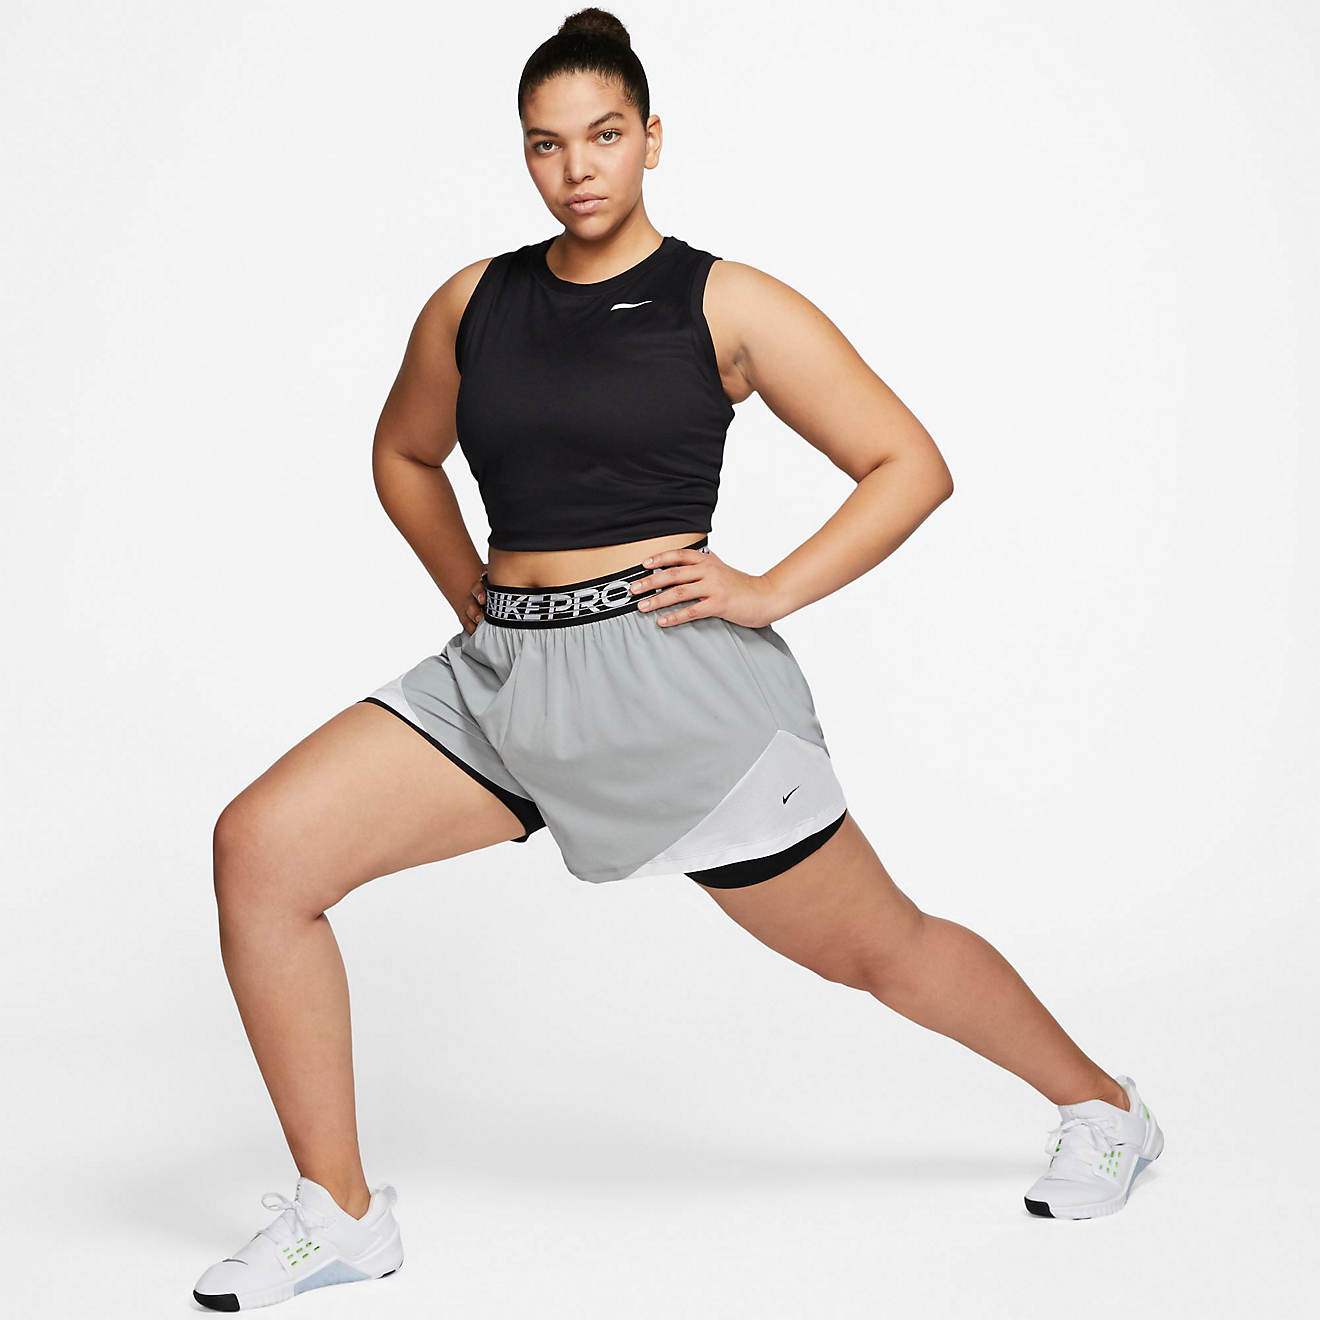 Nike Women's Pro Flex 2-in-1 Plus Size Training Shorts | Academy